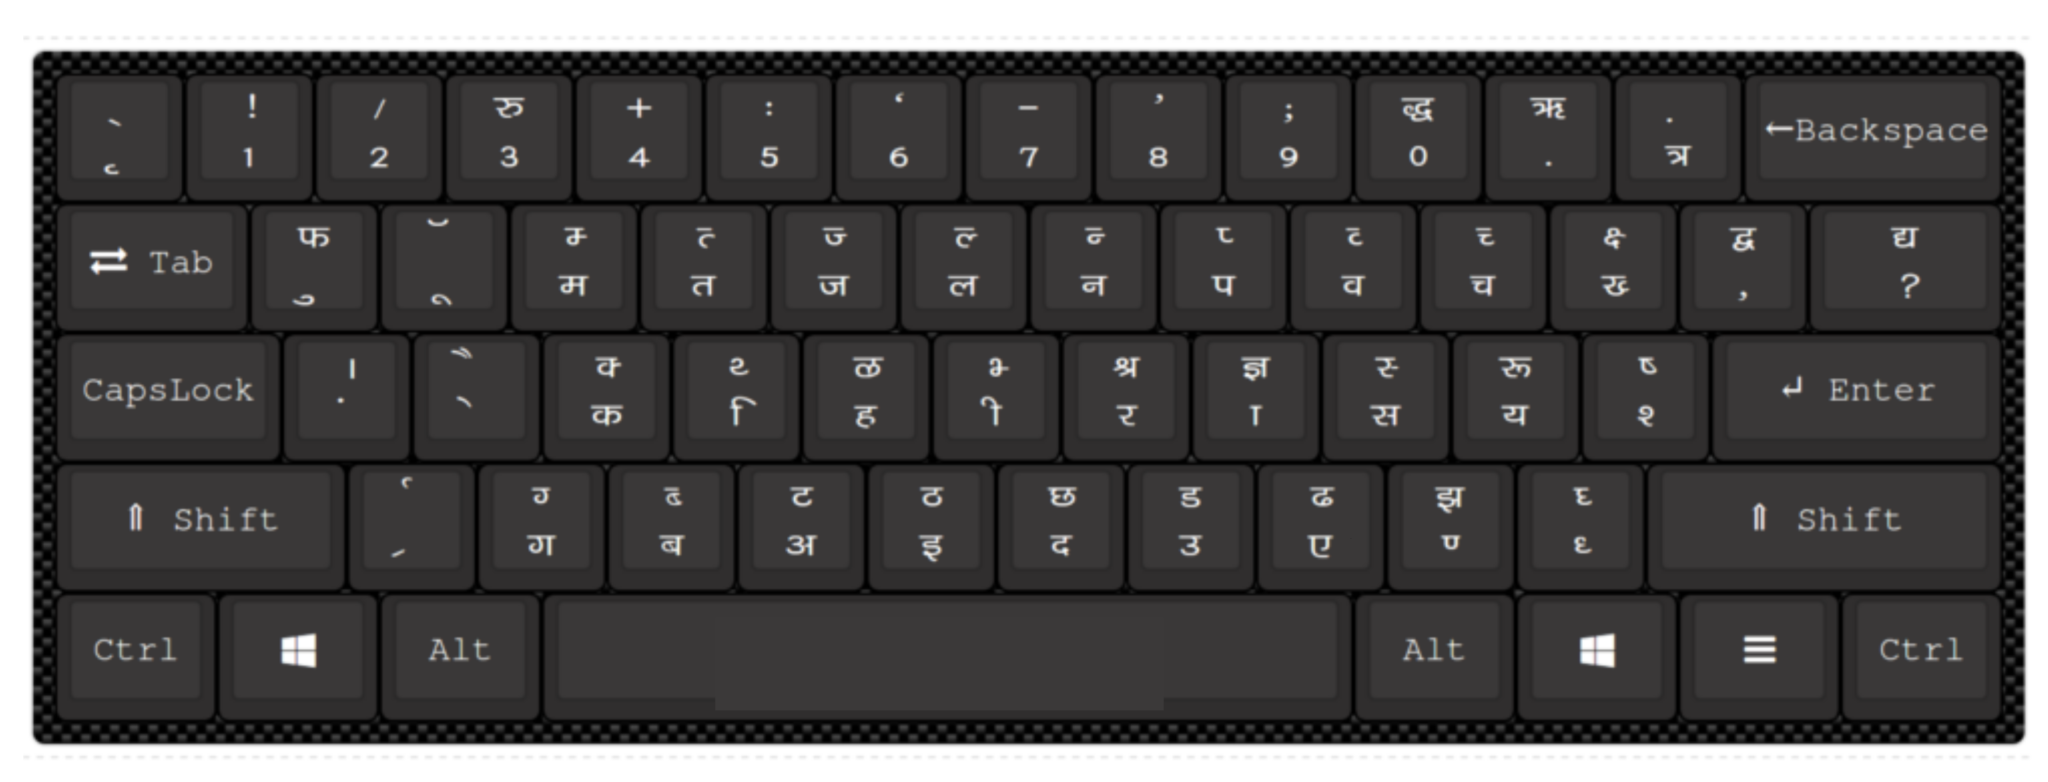 Keyboard-layout-for-kruti-dev-font